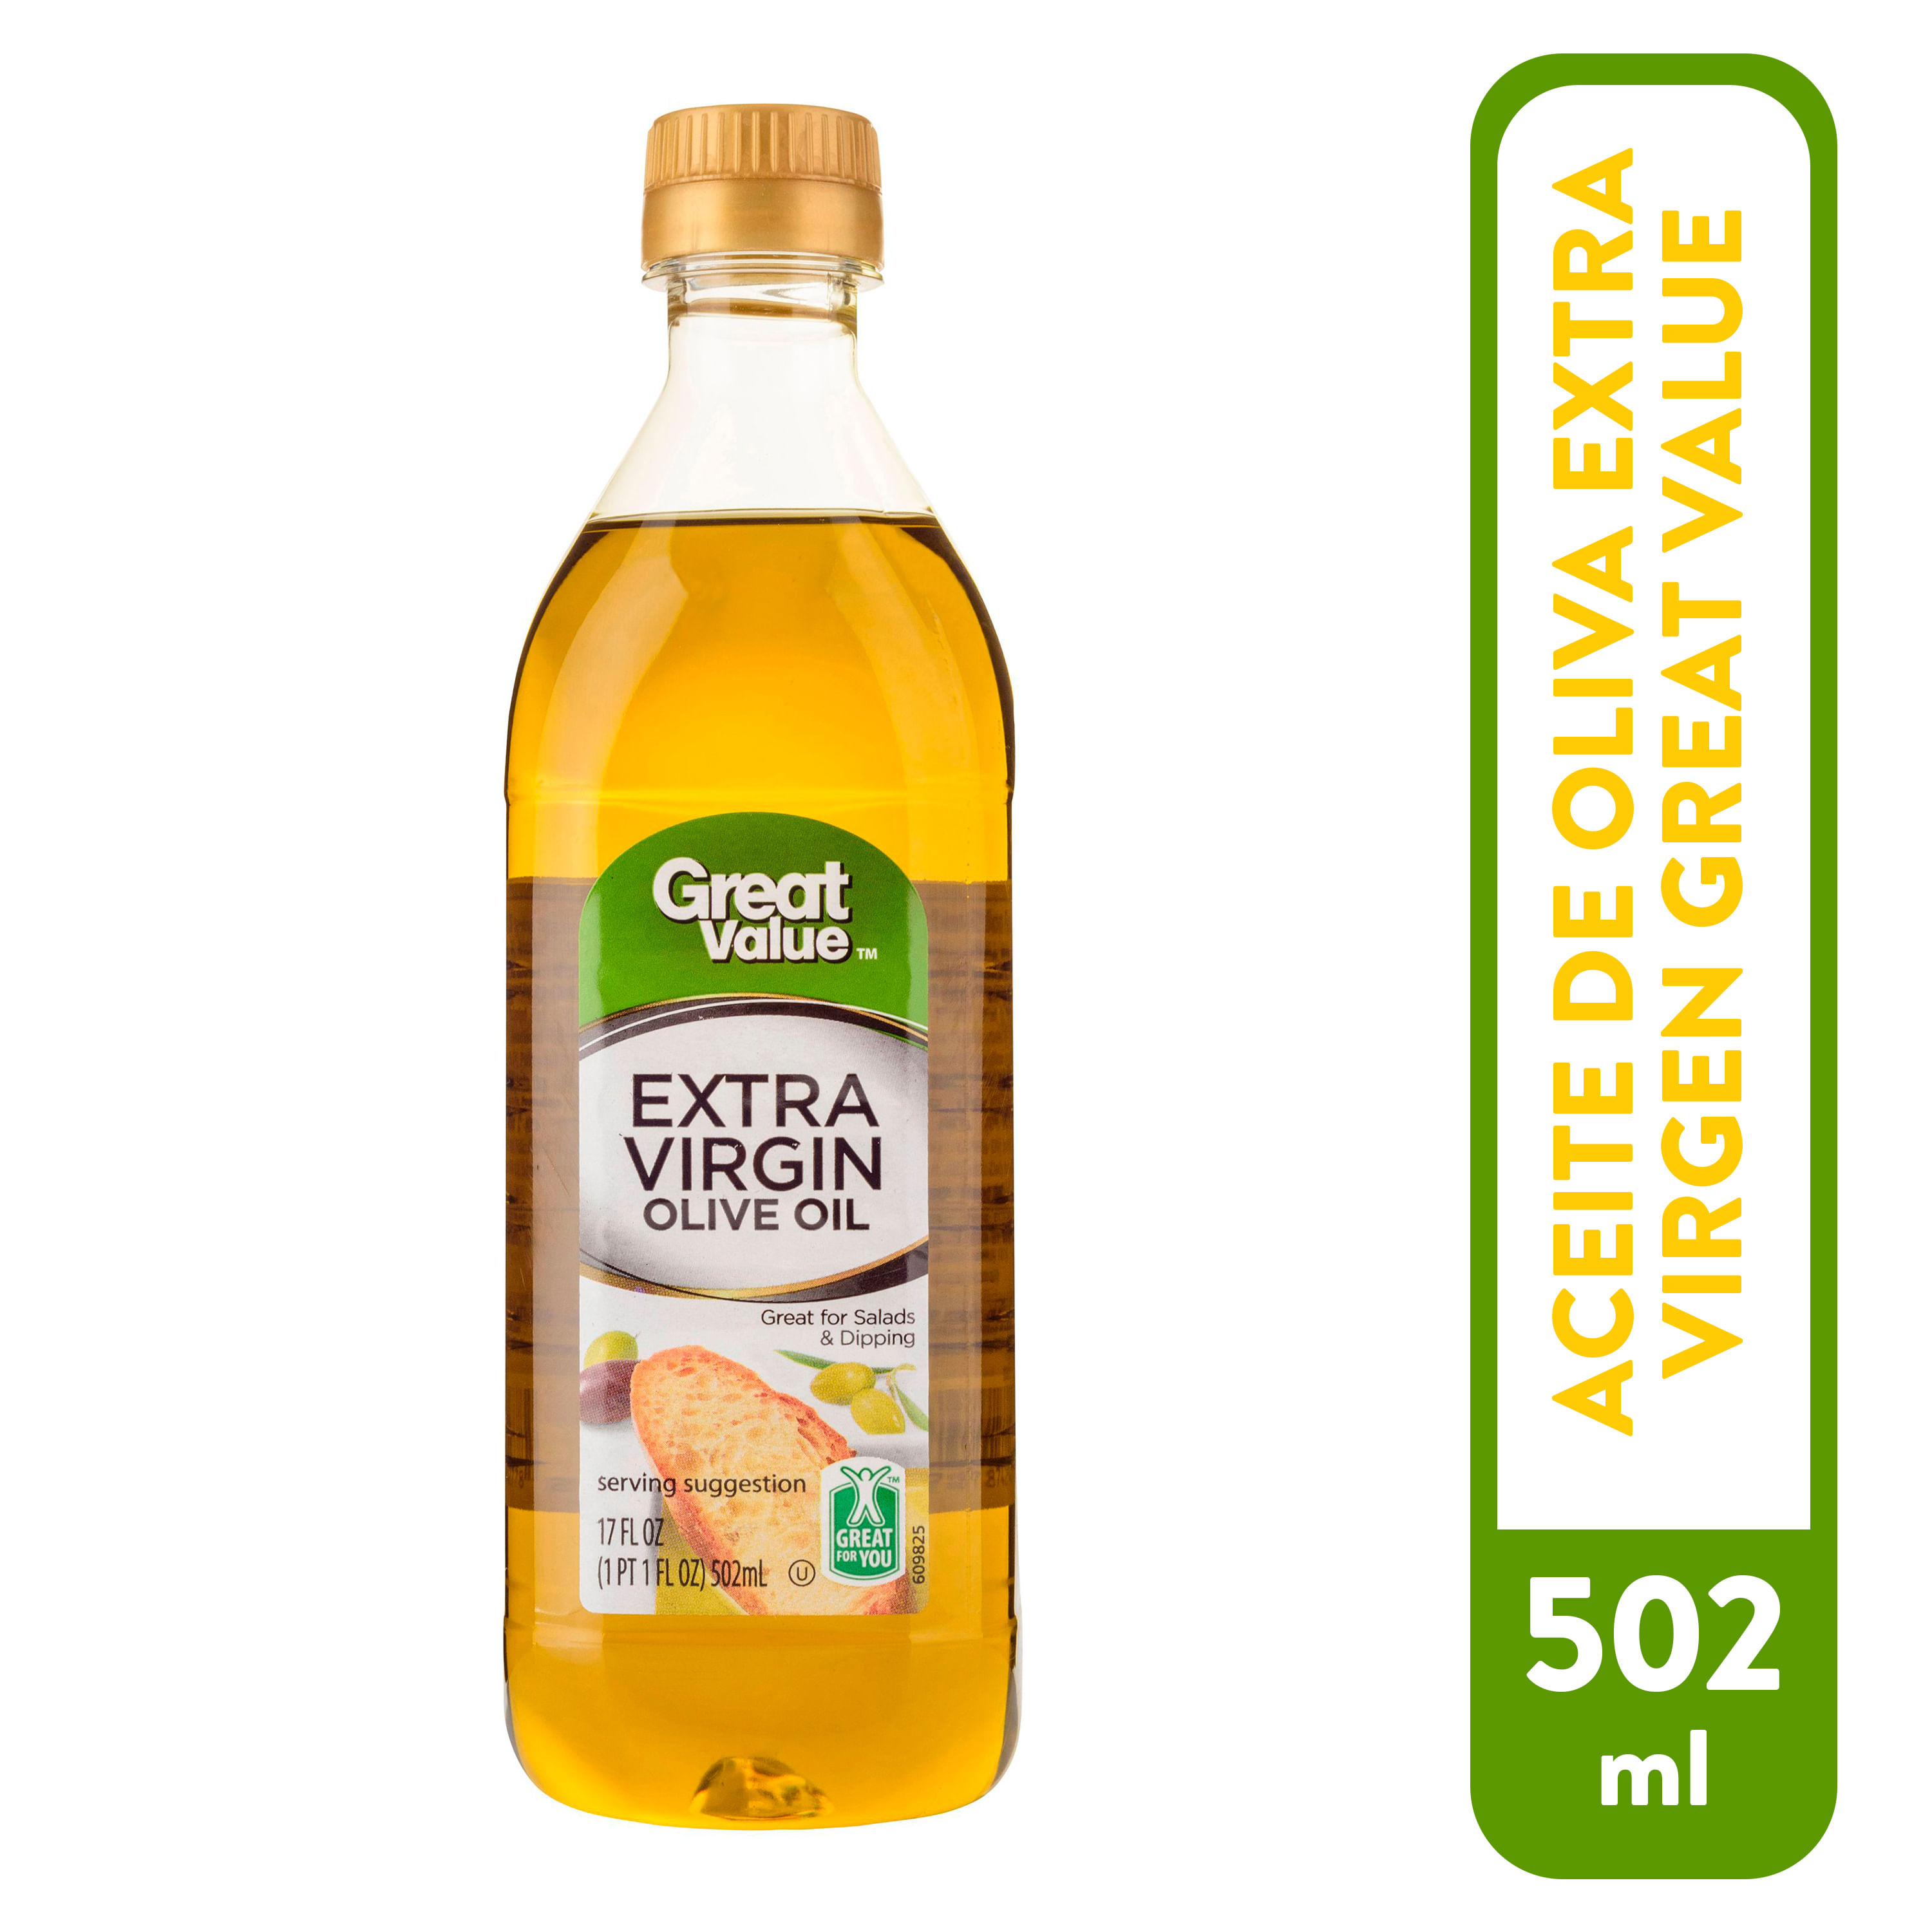 Aceite-Great-Value-Oliva-Extra-Virgen-502ml-1-11544